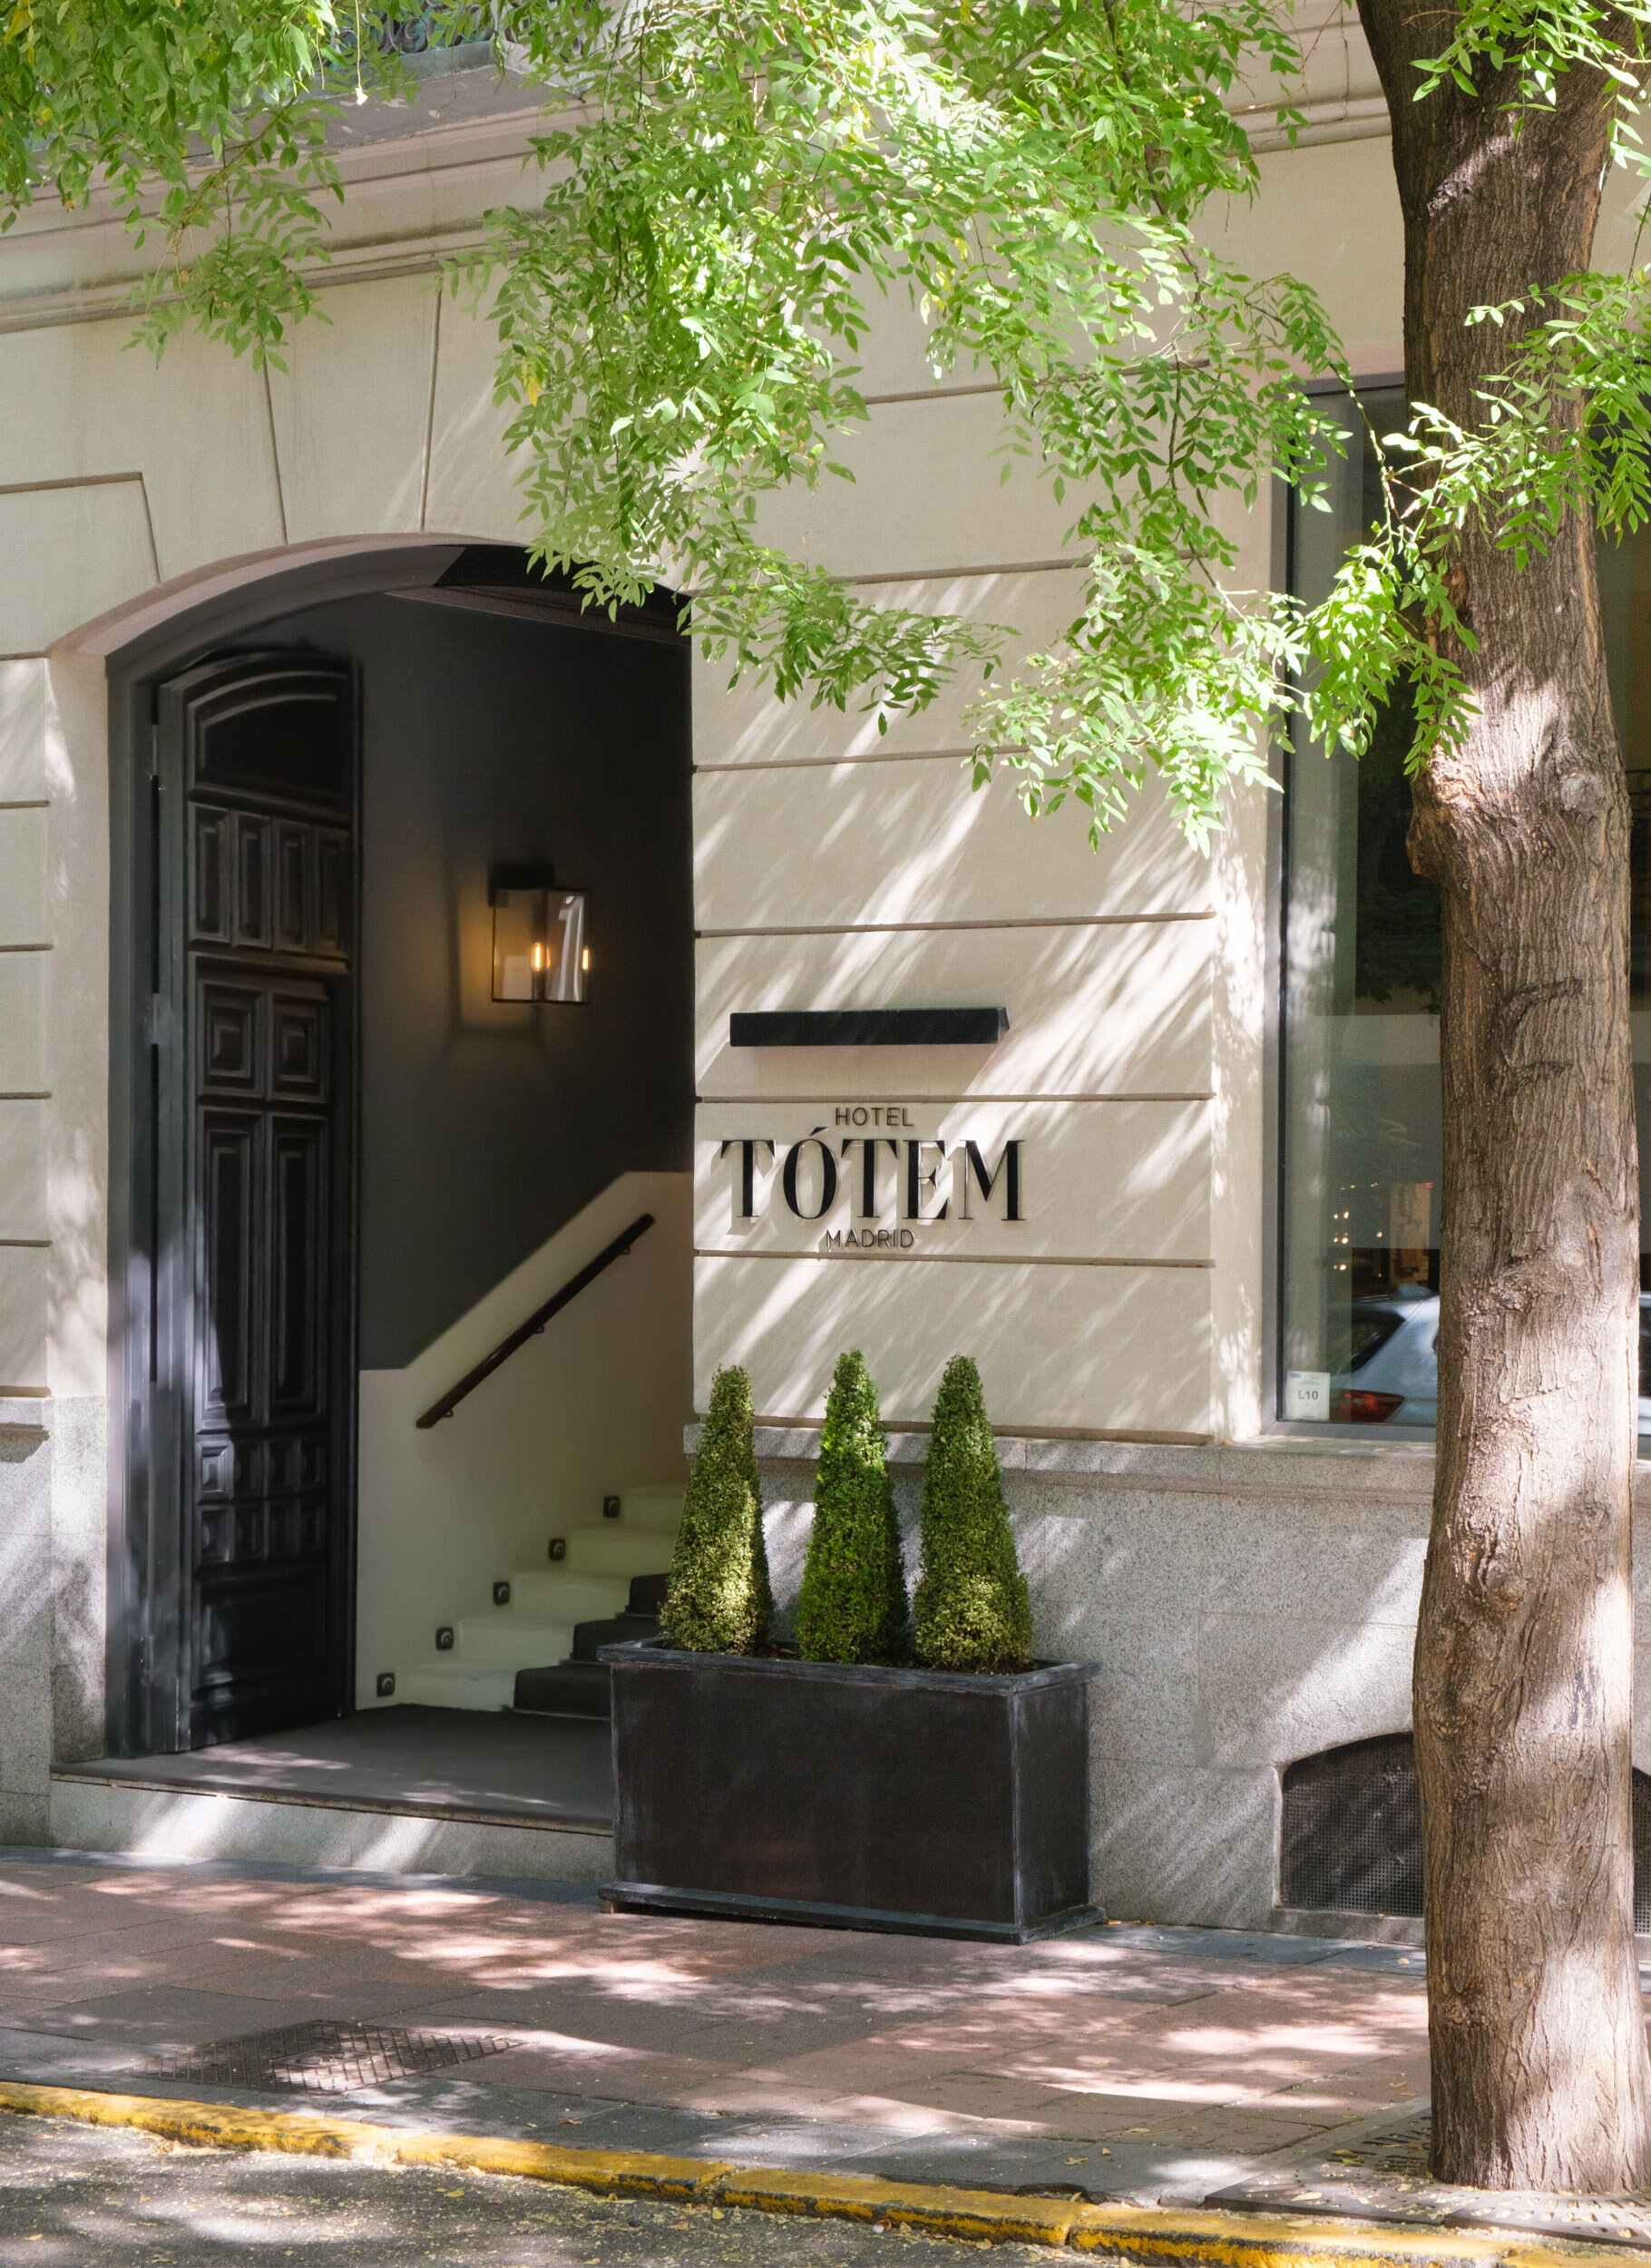 Hotel Totem-spain-Arturo-Lauren-art-sanchez-architecture-interior-photographer-8.jpg